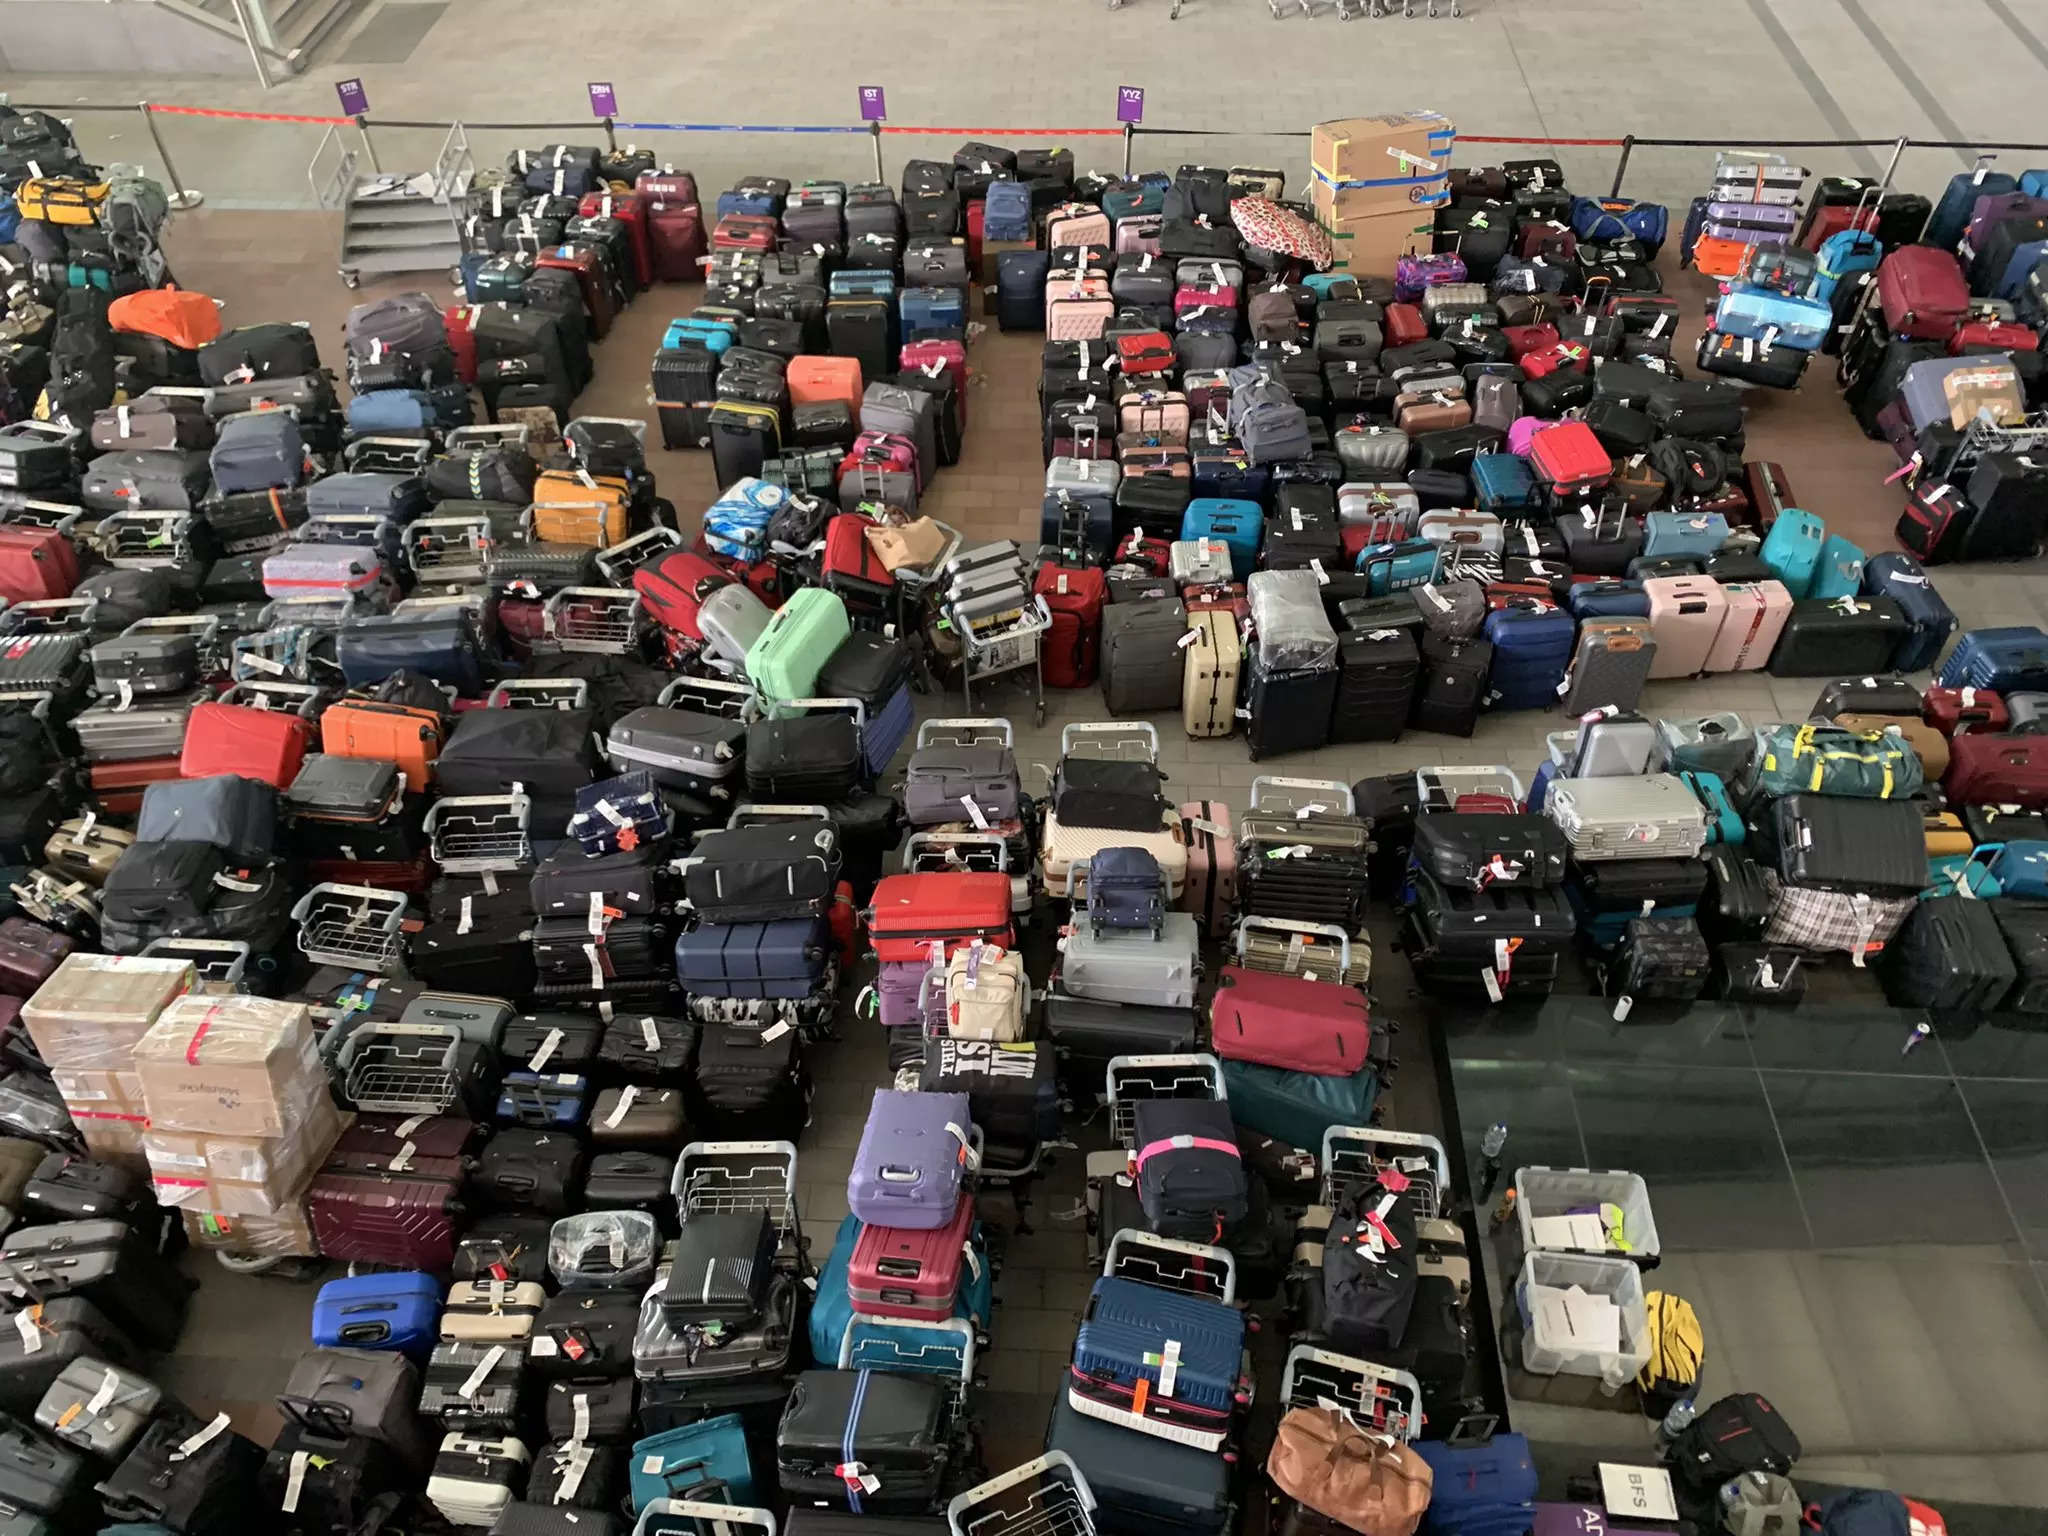 Heathrow luggage pile-up